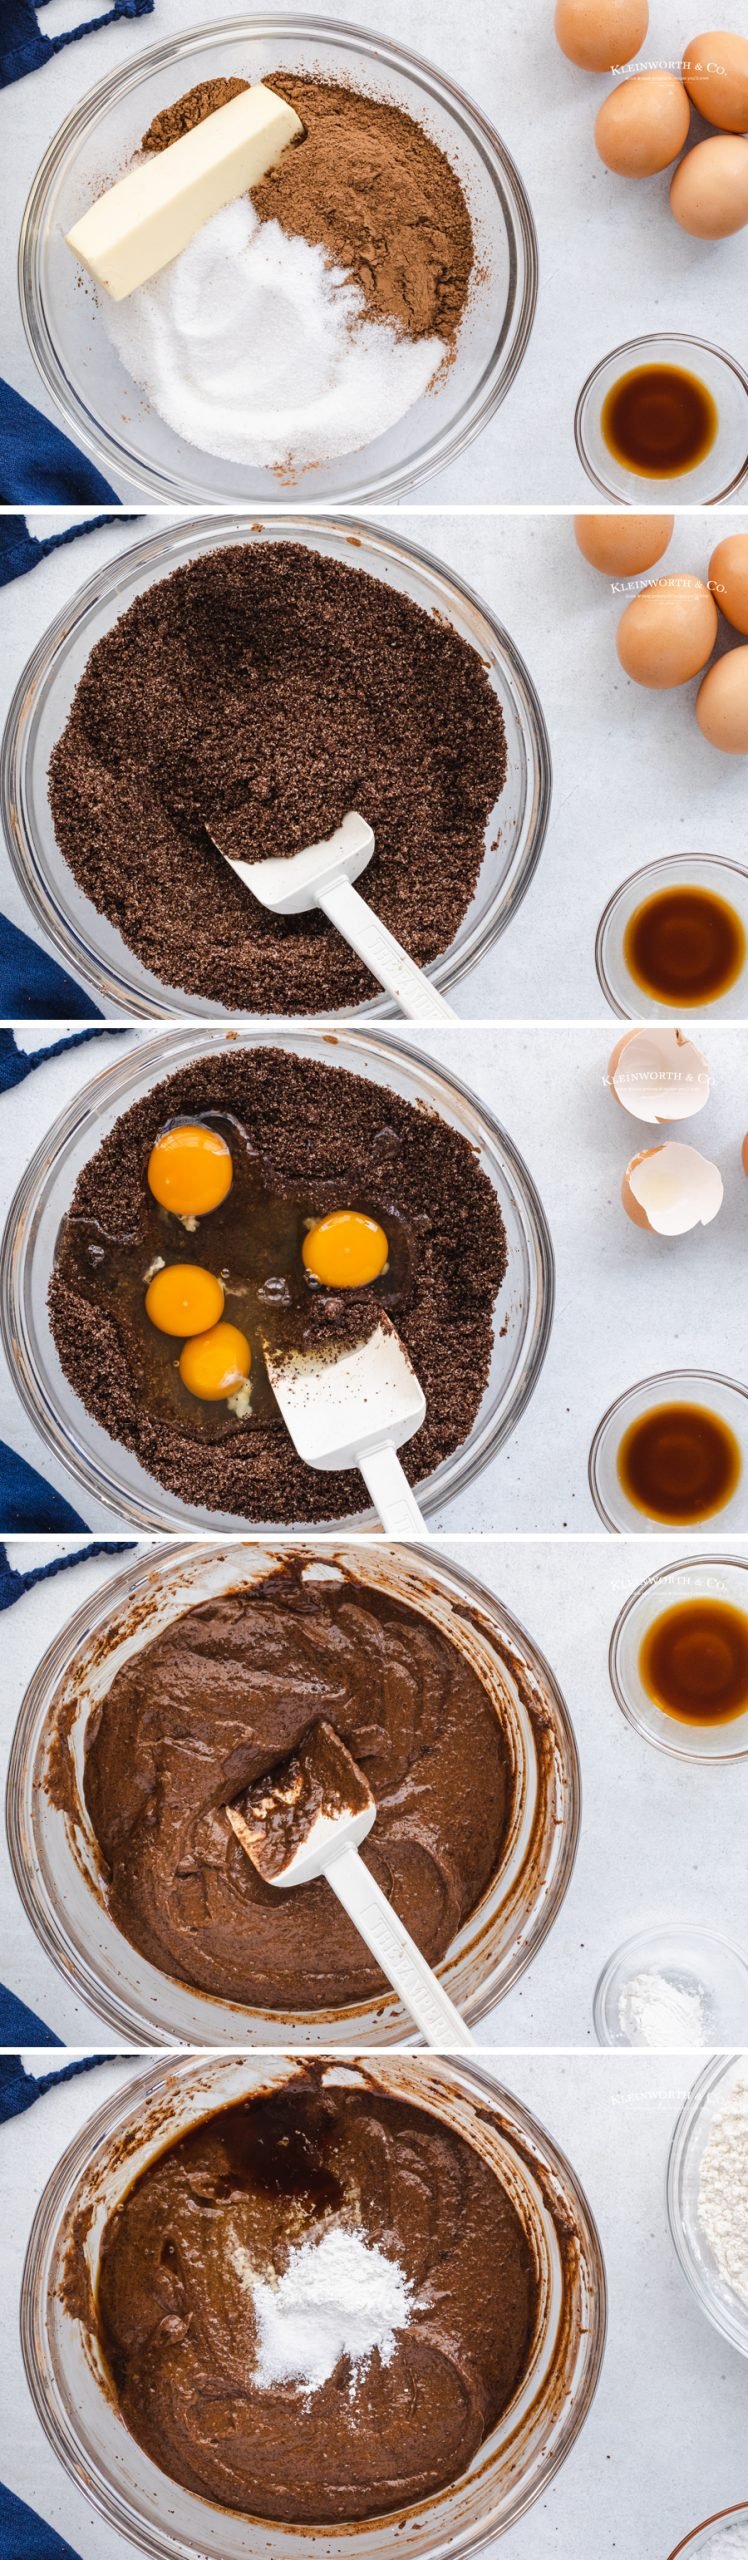 how to make Chocolate Crinkle Cookies